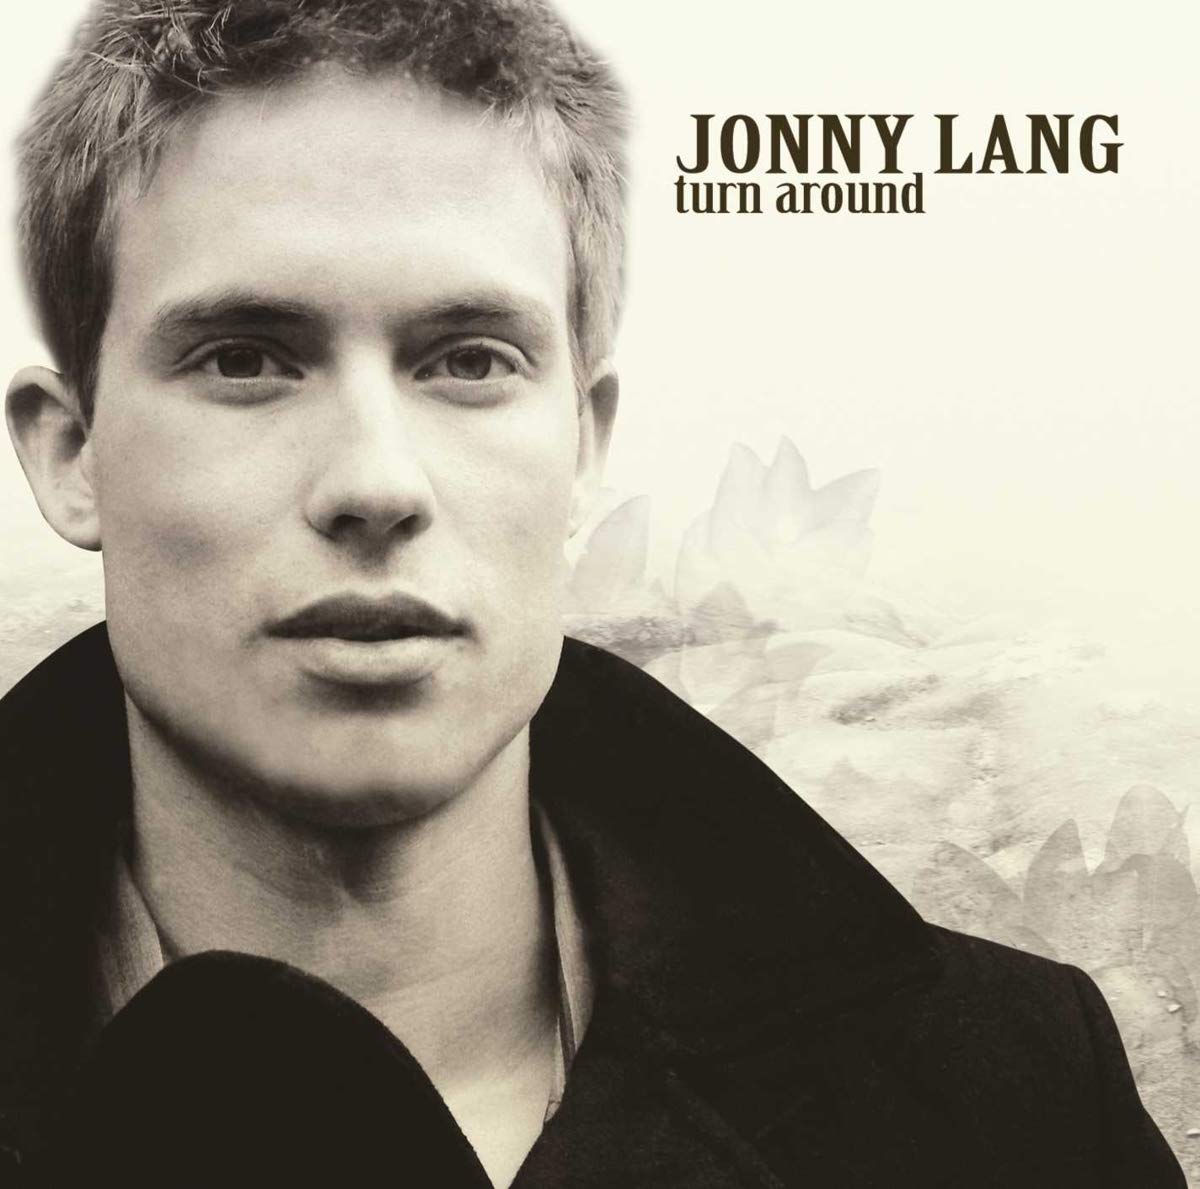 Johnny Lang album art for Turn Around